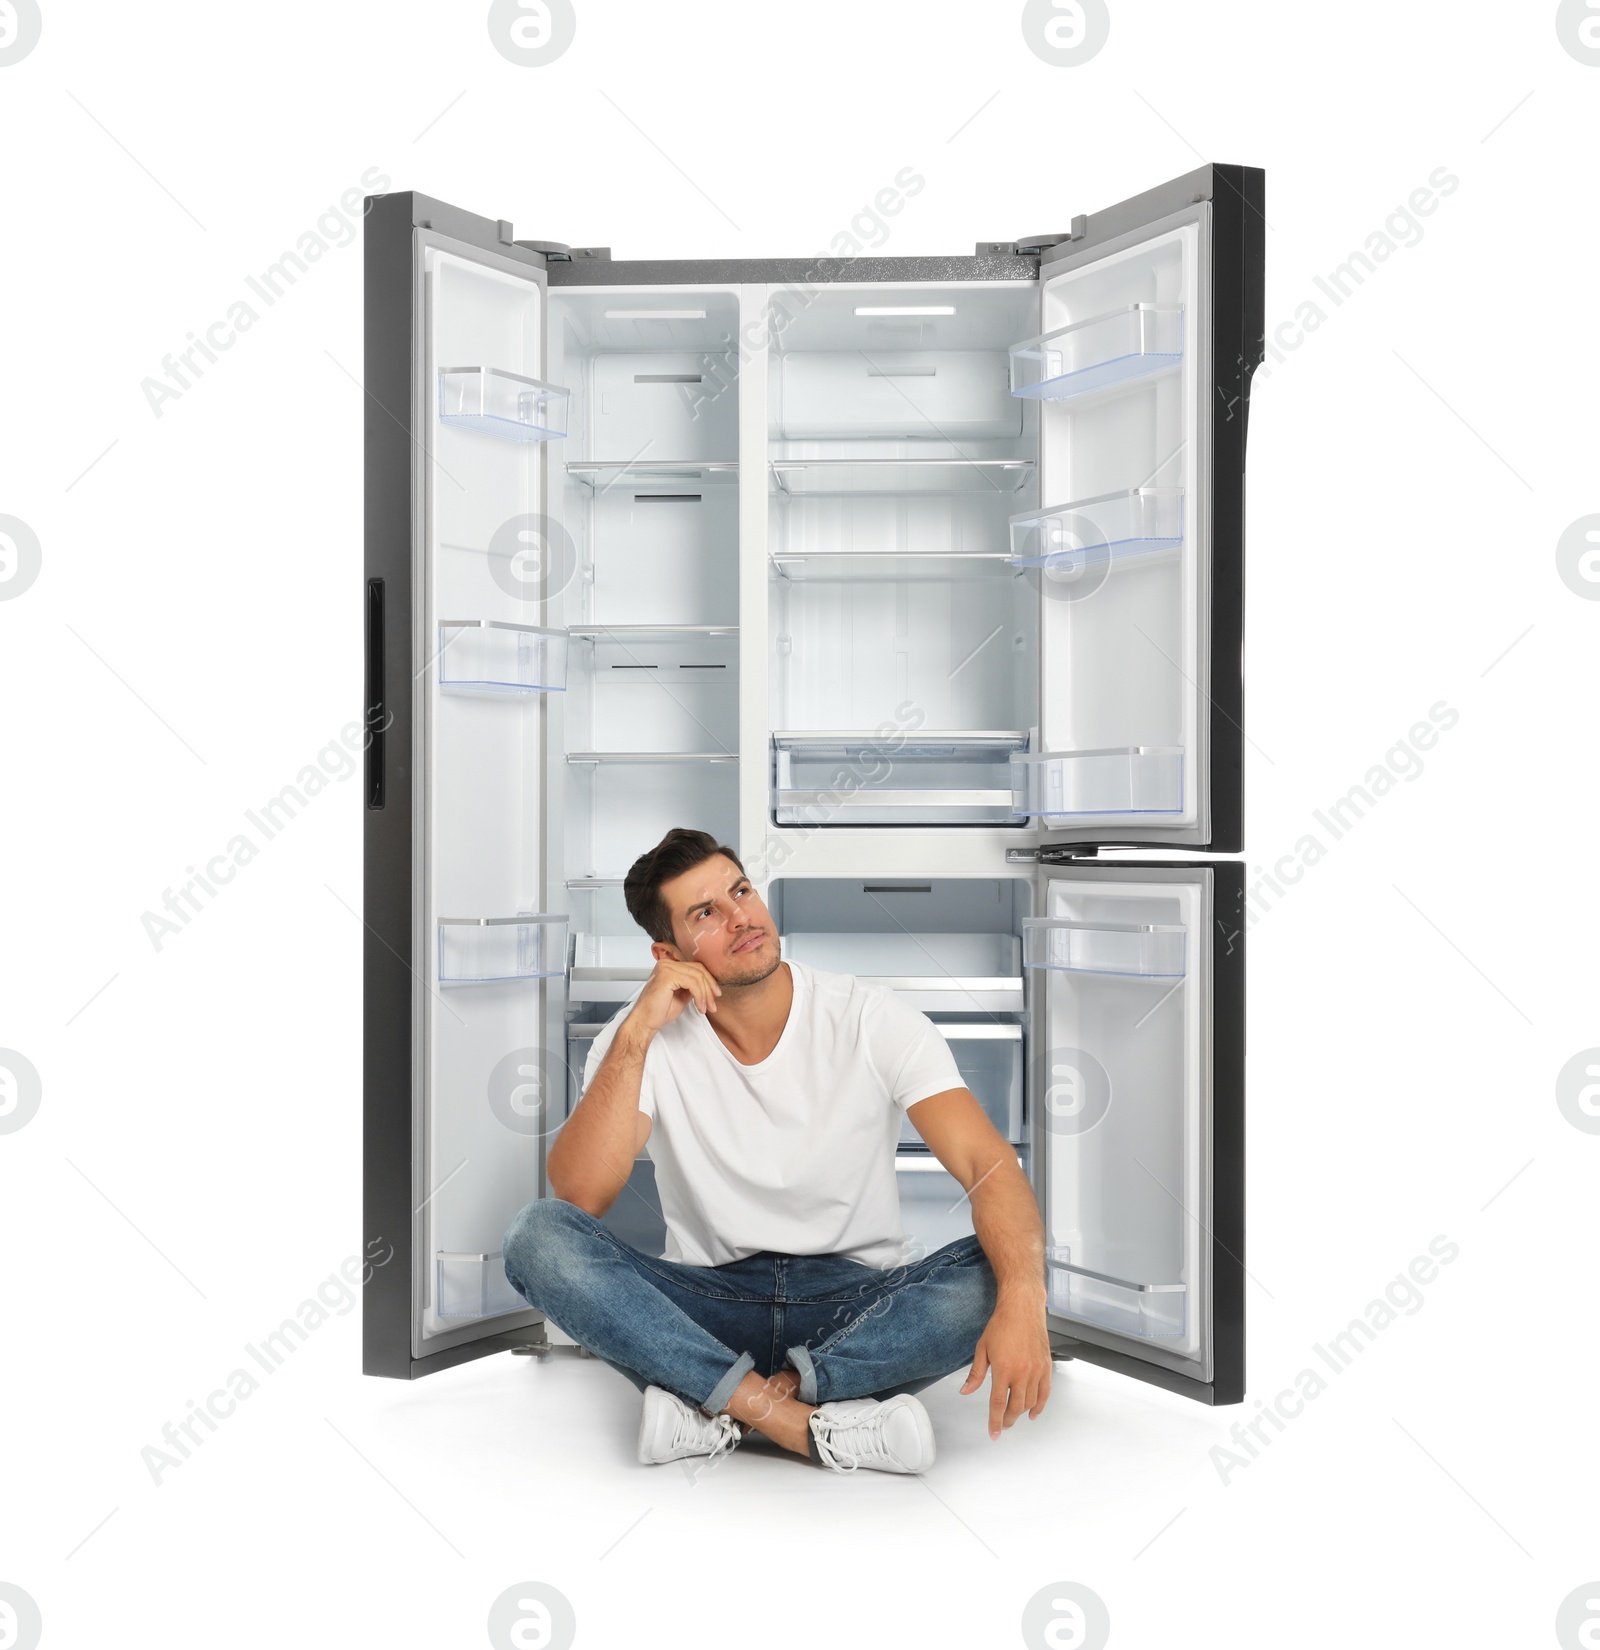 Photo of Man near open empty refrigerator on white background